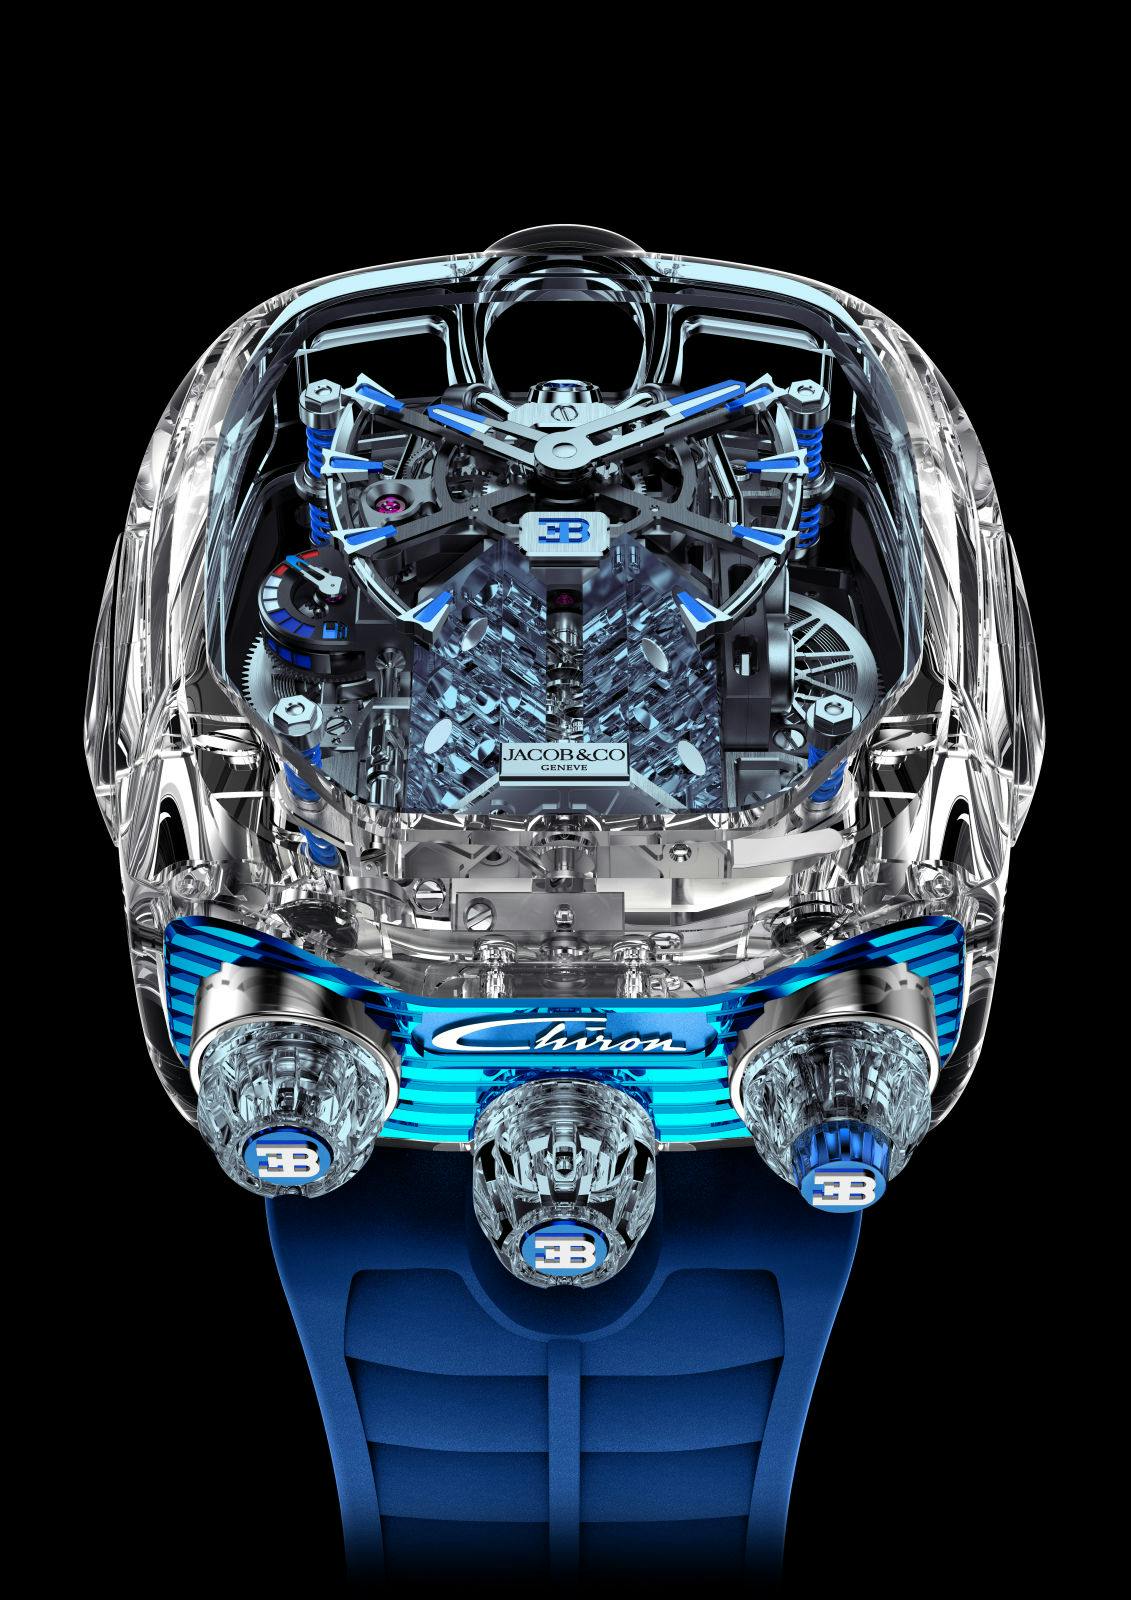 La Jacob & Co. x Bugatti Chiron Tourbillon Limited Edition “Sapphire Crystal” en bleu.